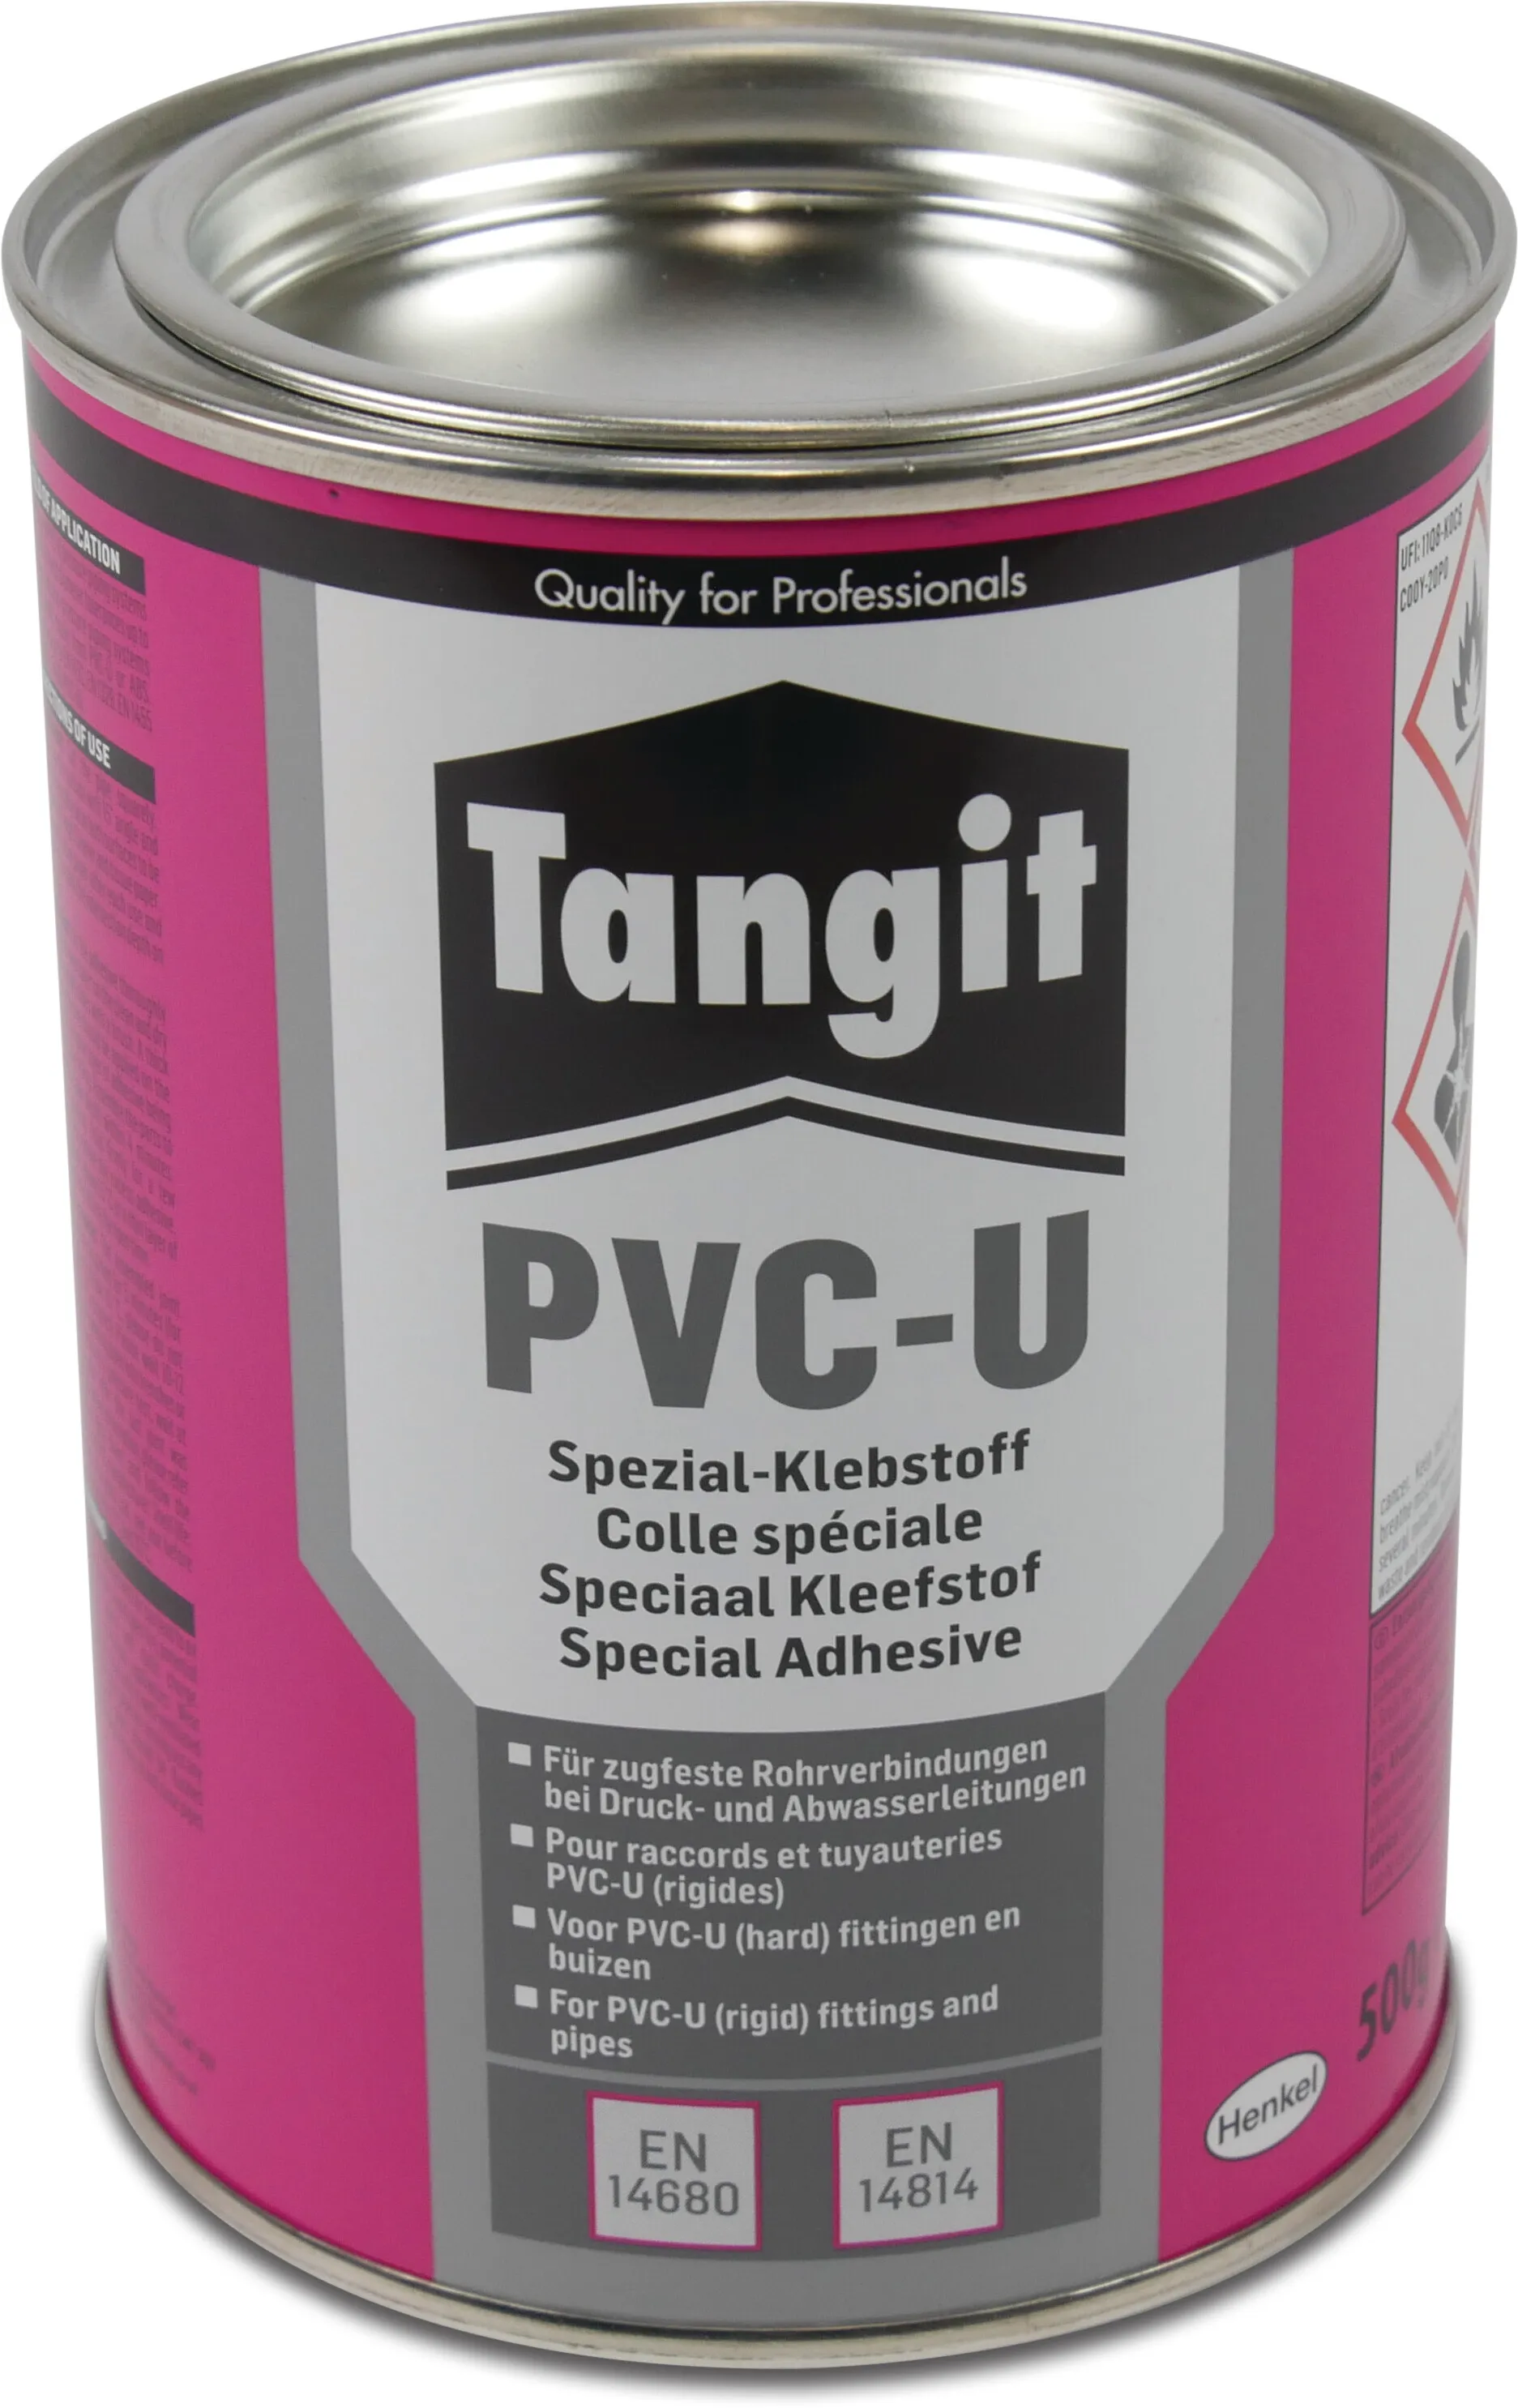 Tangit PVC lim 500g uden pensel KIWA type All Pressure label EN/DE/NL/FR